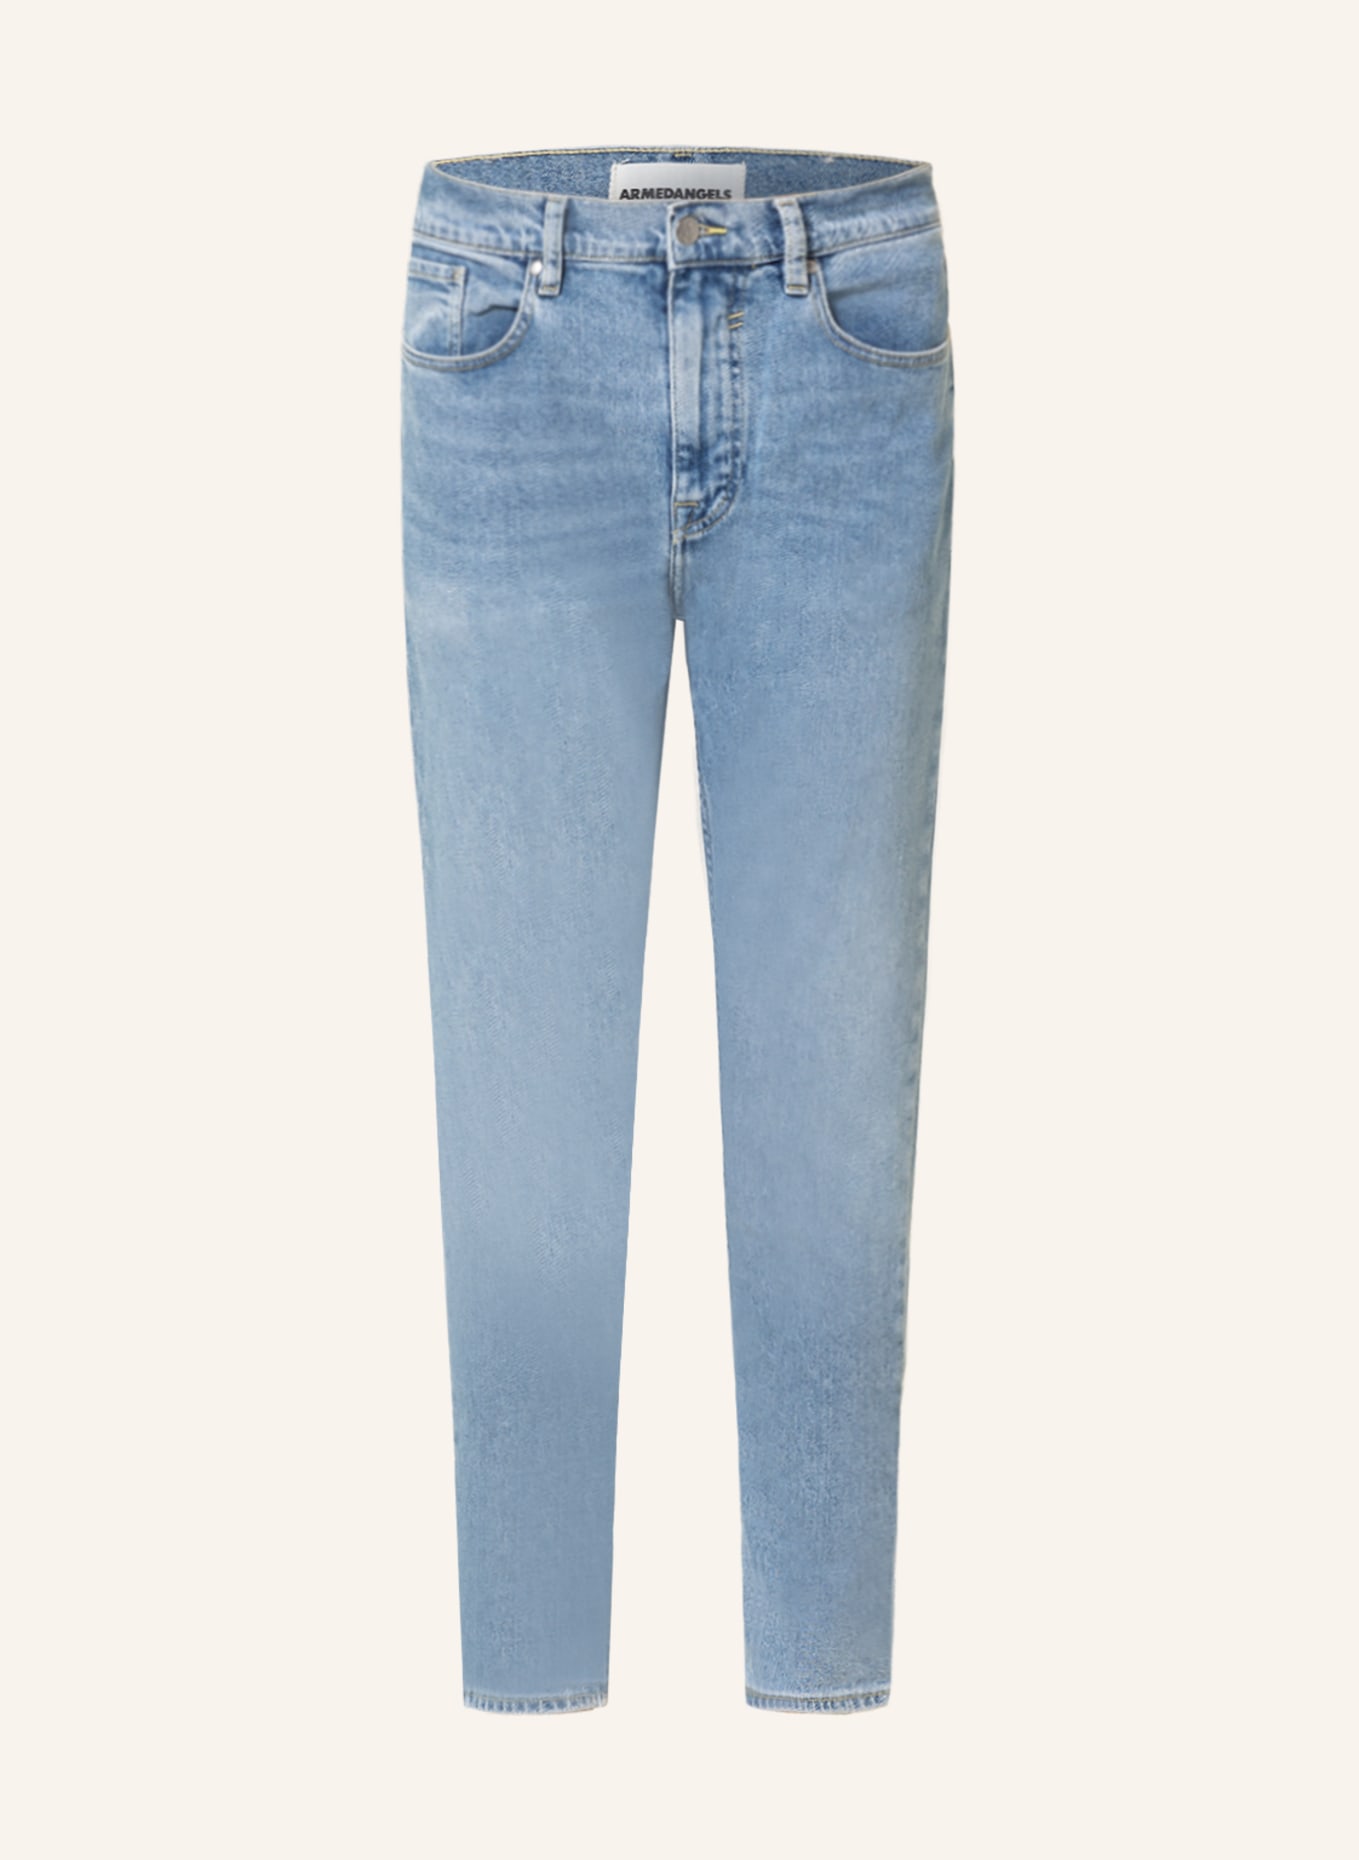 ARMEDANGELS Jeans AARO Tapered Fit, Farbe: 1855 easy blue (Bild 1)